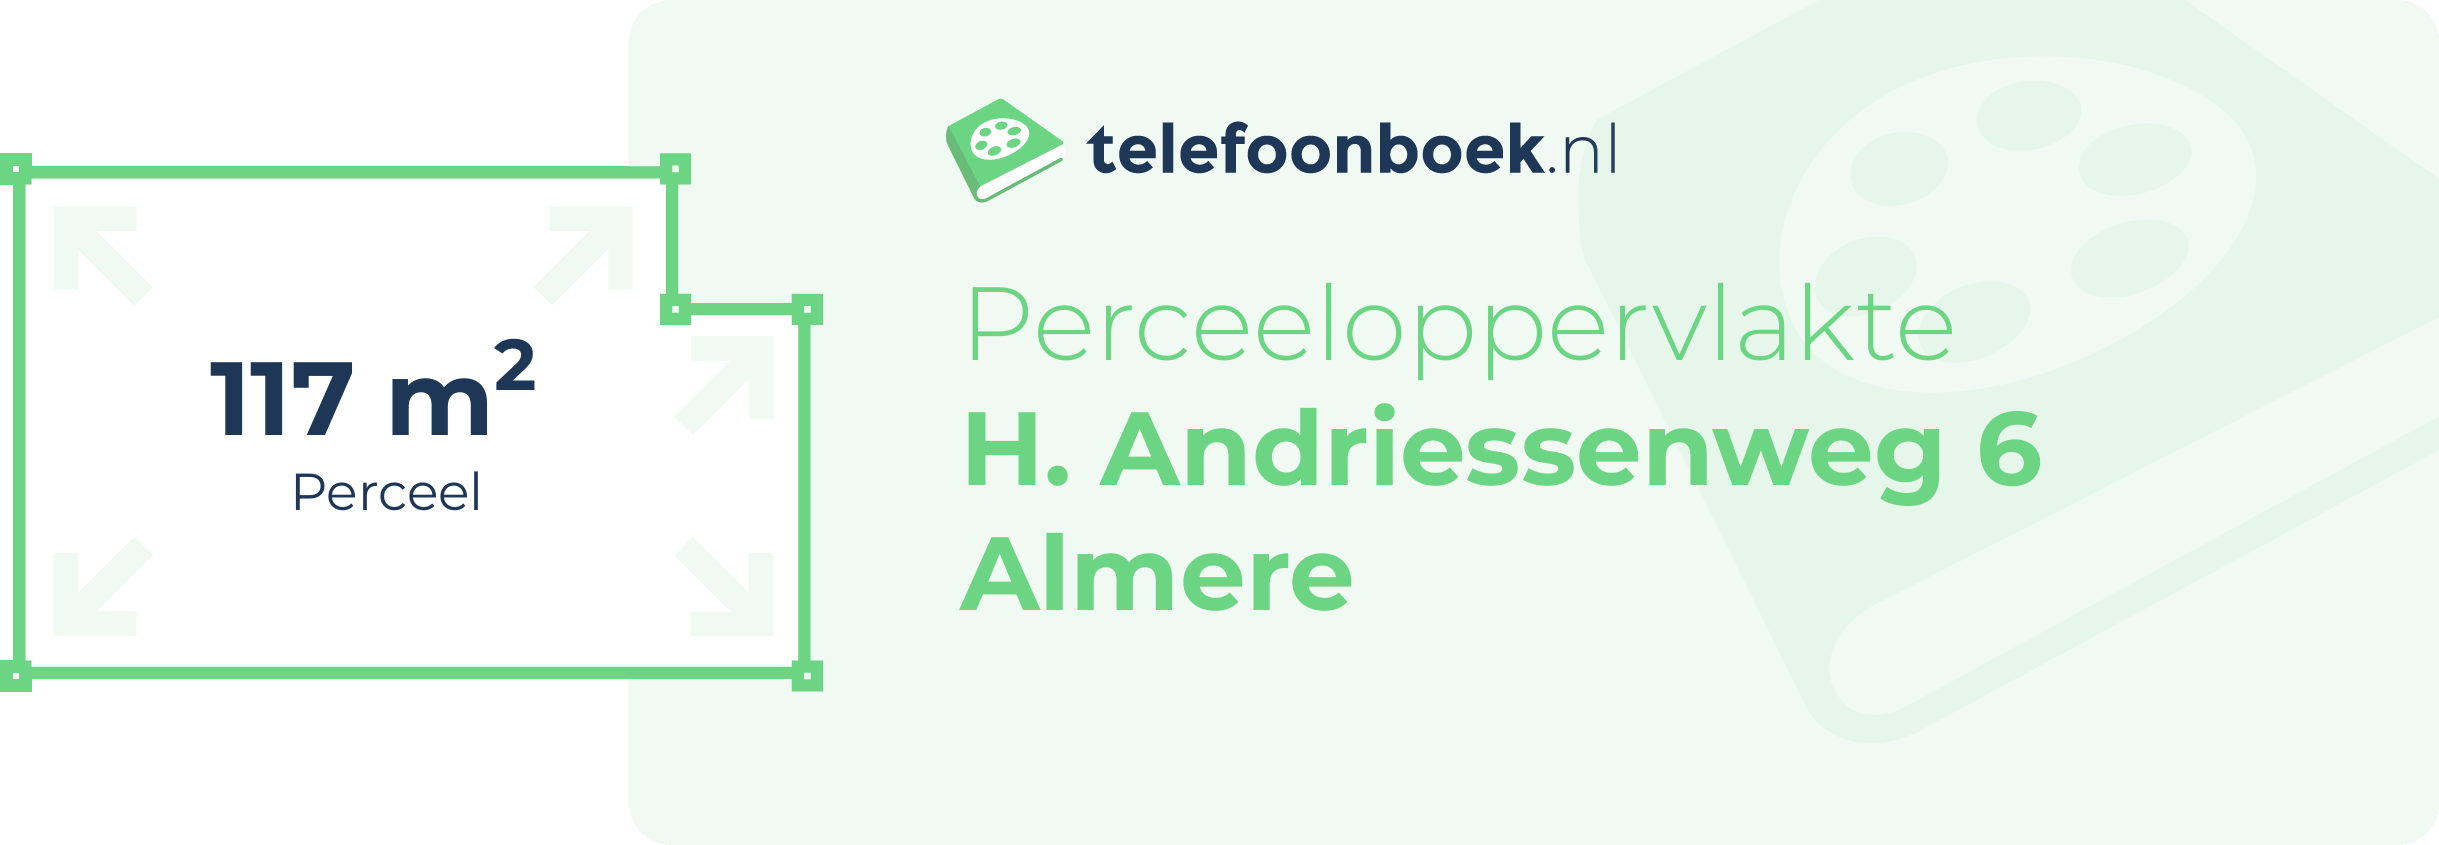 Perceeloppervlakte H. Andriessenweg 6 Almere